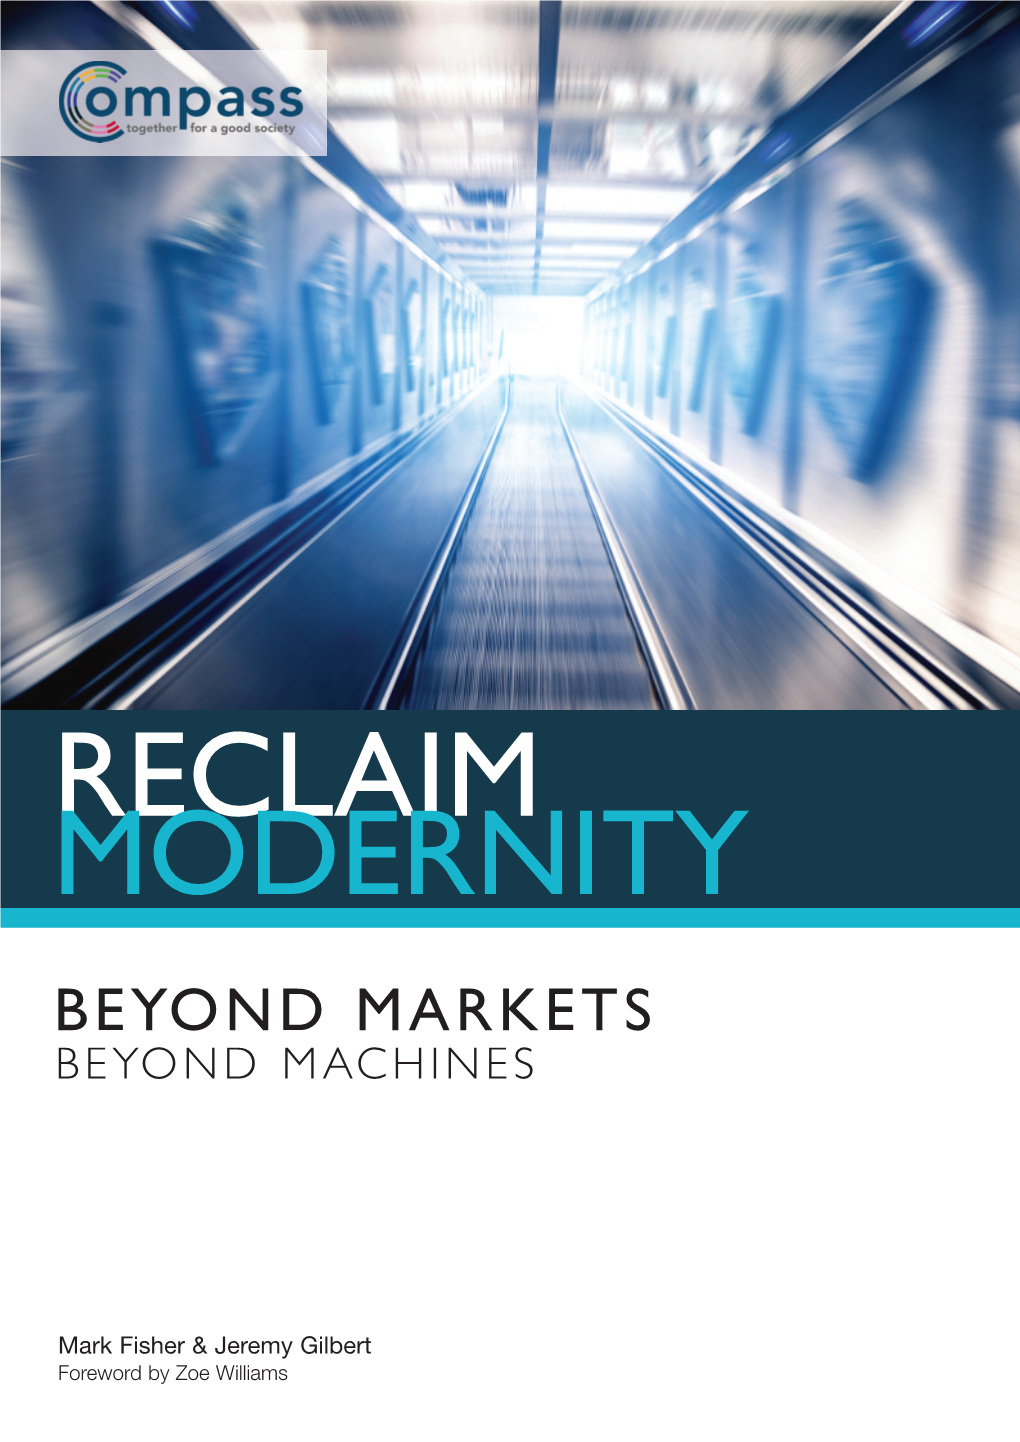 Beyond Markets Beyond Machines